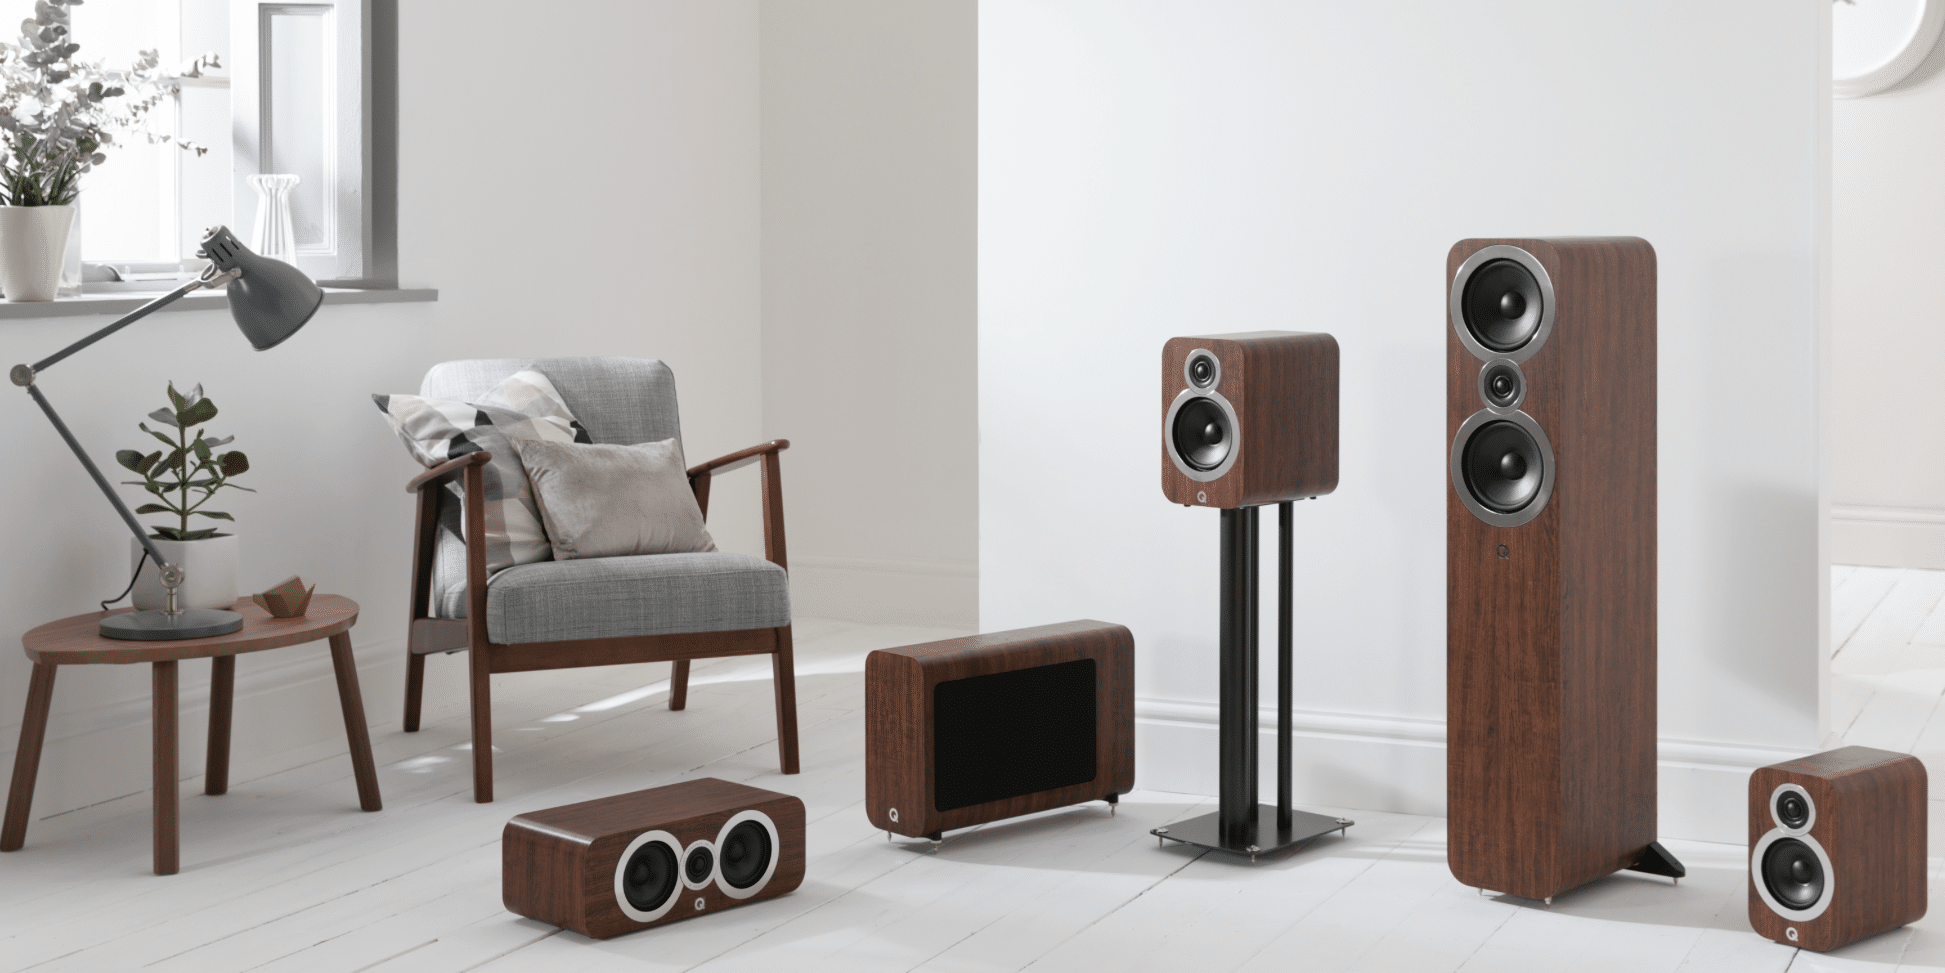 3000i loudspeaker series From Q Acoustics